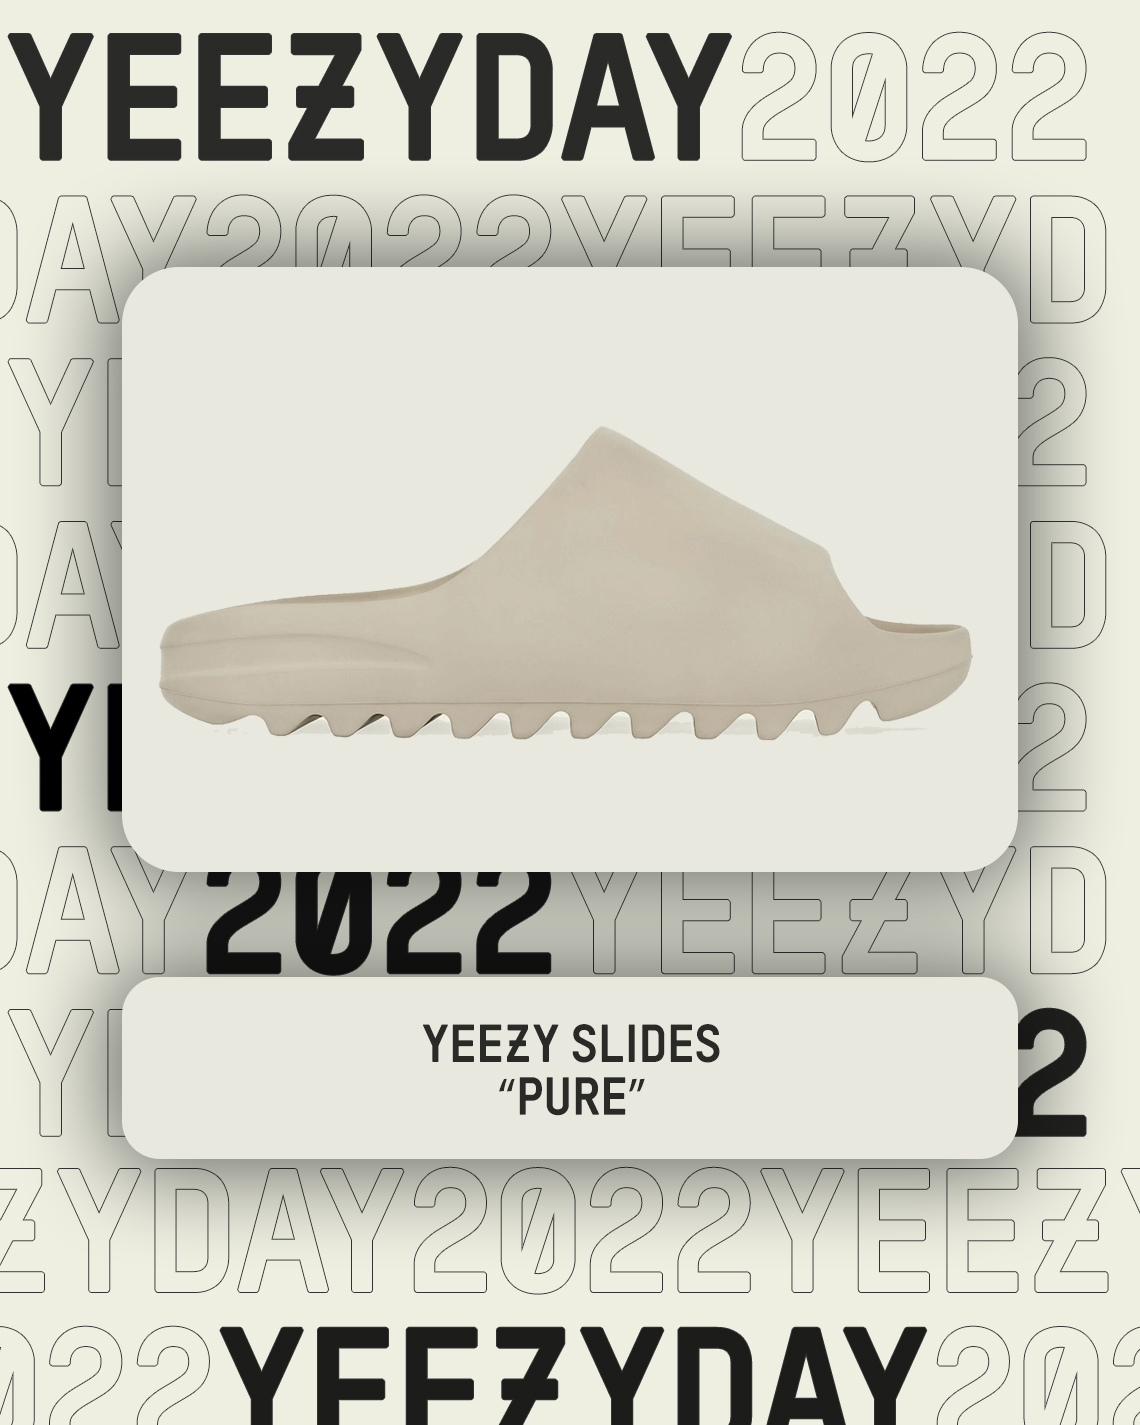 Yeezy Day 2022 Yeezy Slides Pure